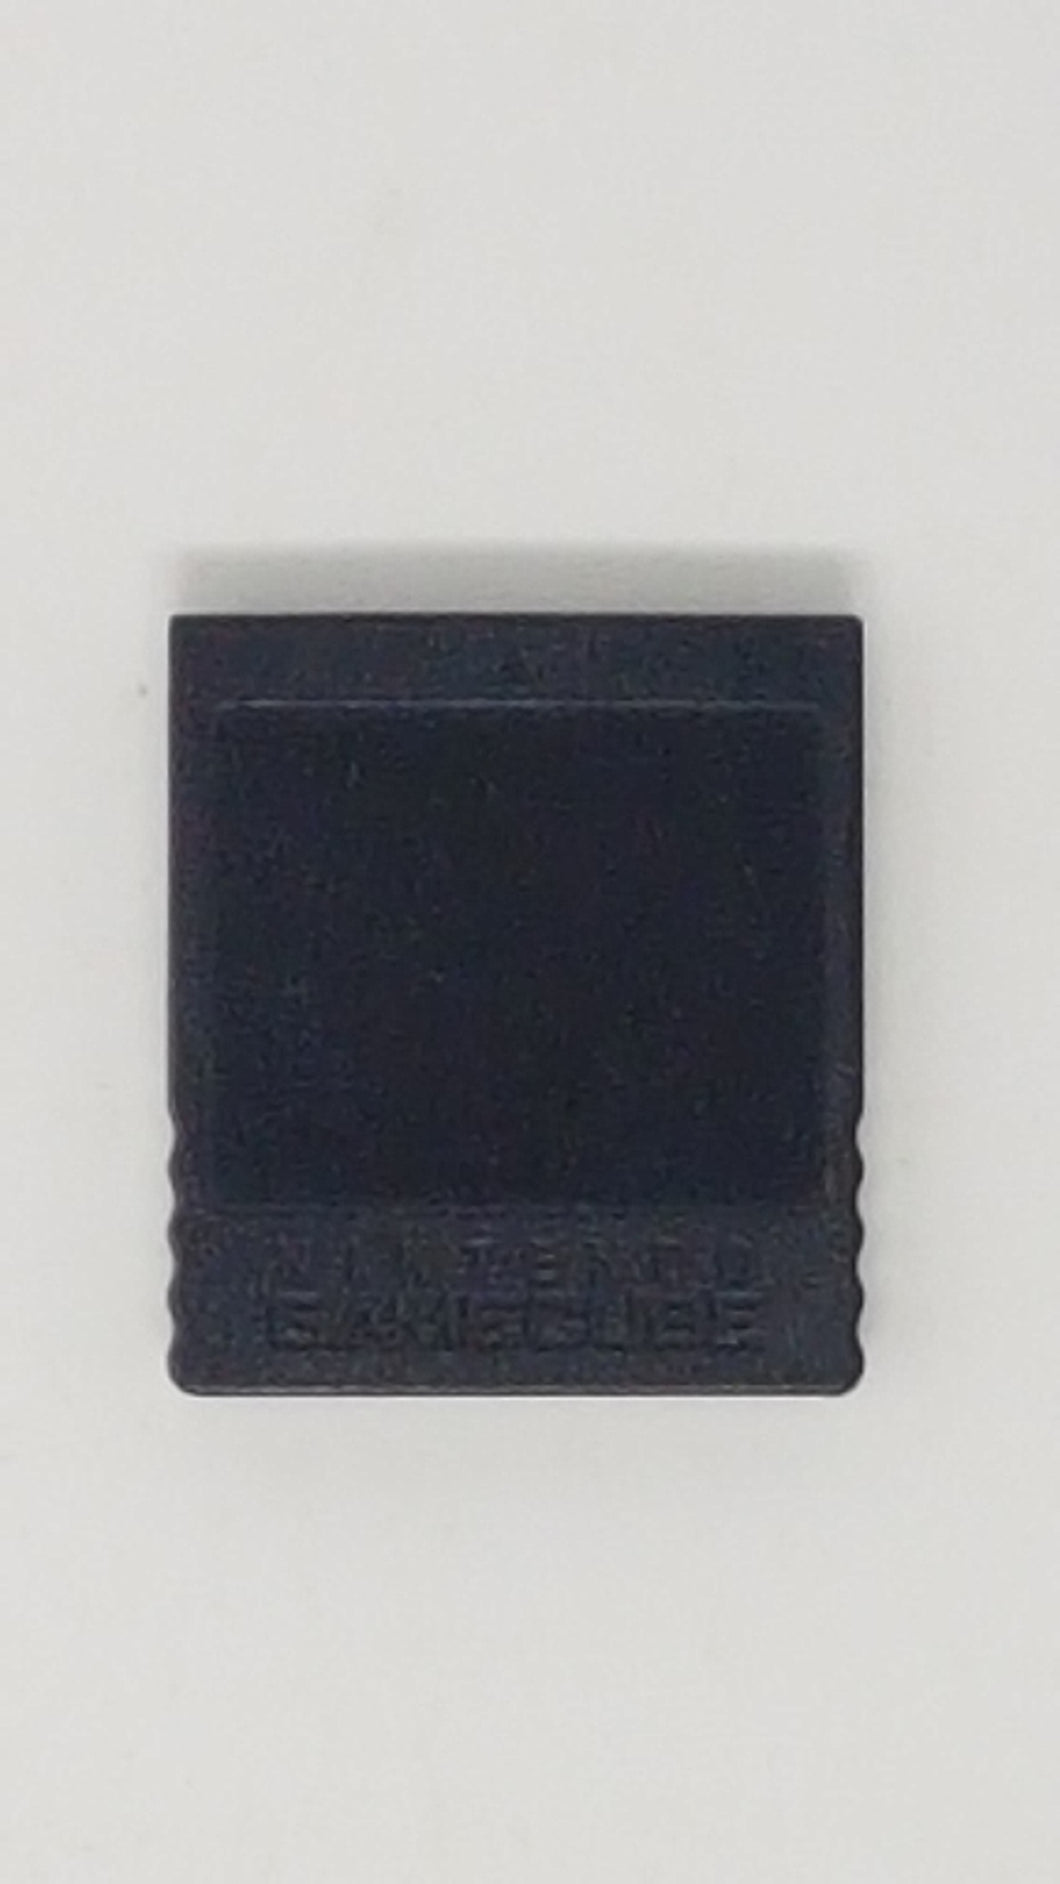 16MB 251 Block Memory Card - Nintendo Gamecube